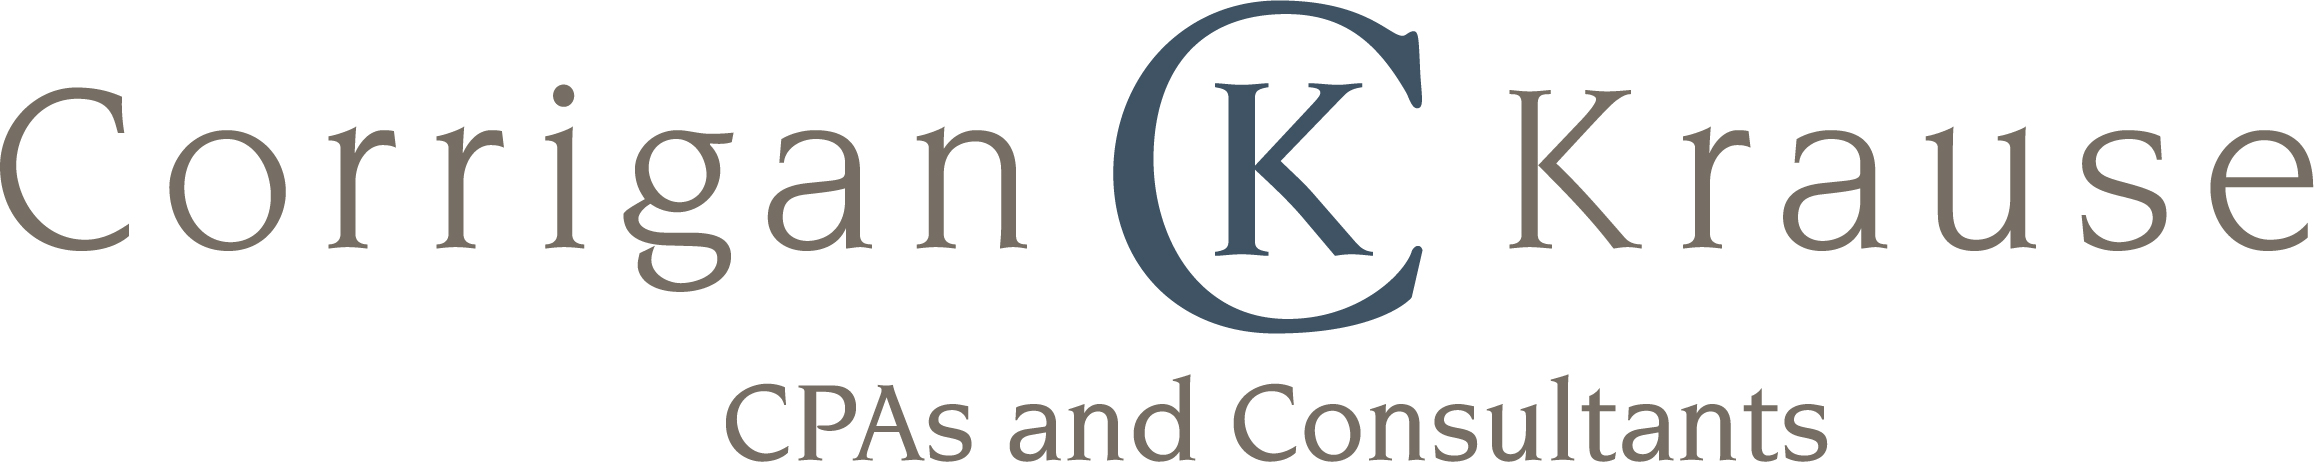 Corrigan Krause Company Logo